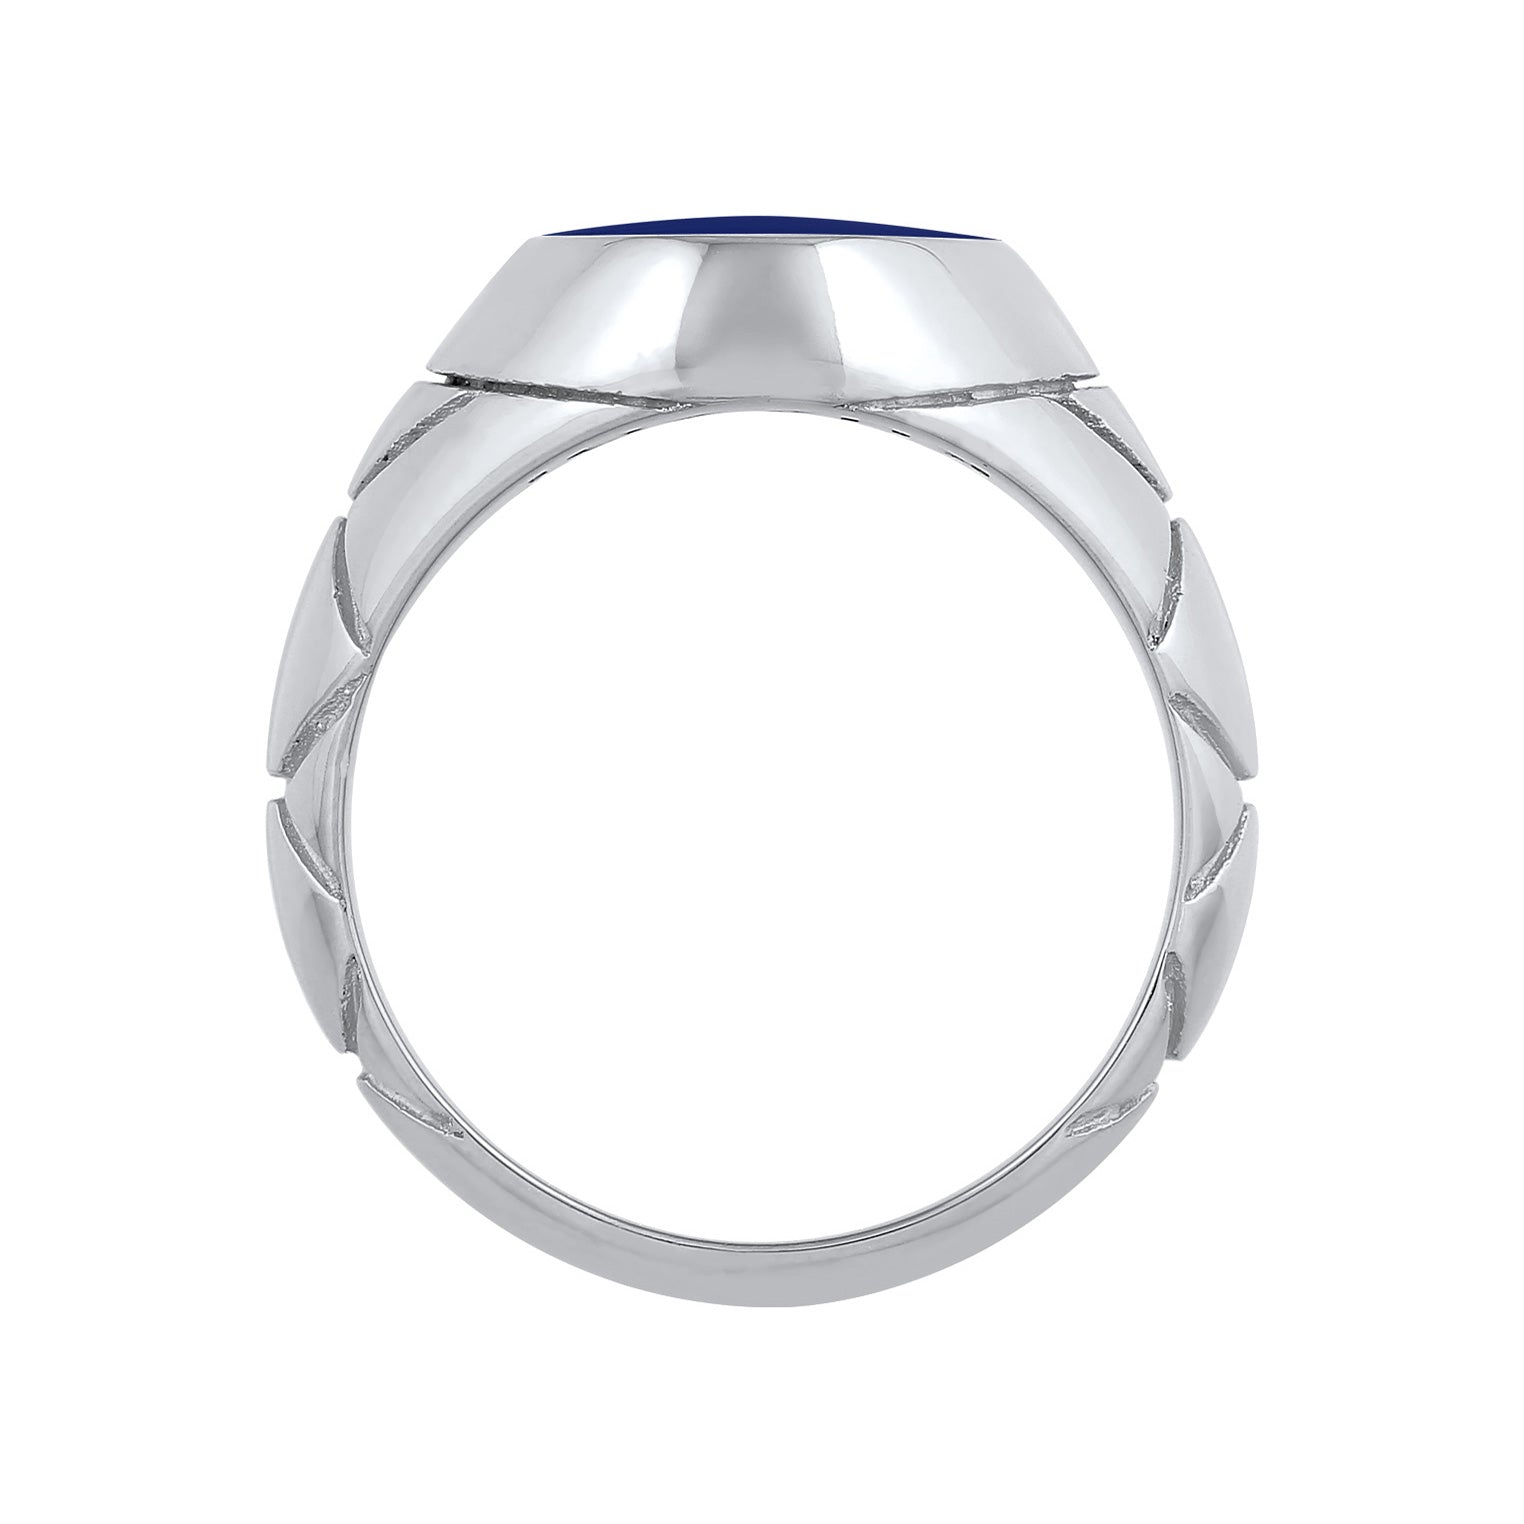 Silber - KUZZOI | Siegelring Elegant | Emaille (Blau) | 925er Sterling Silber